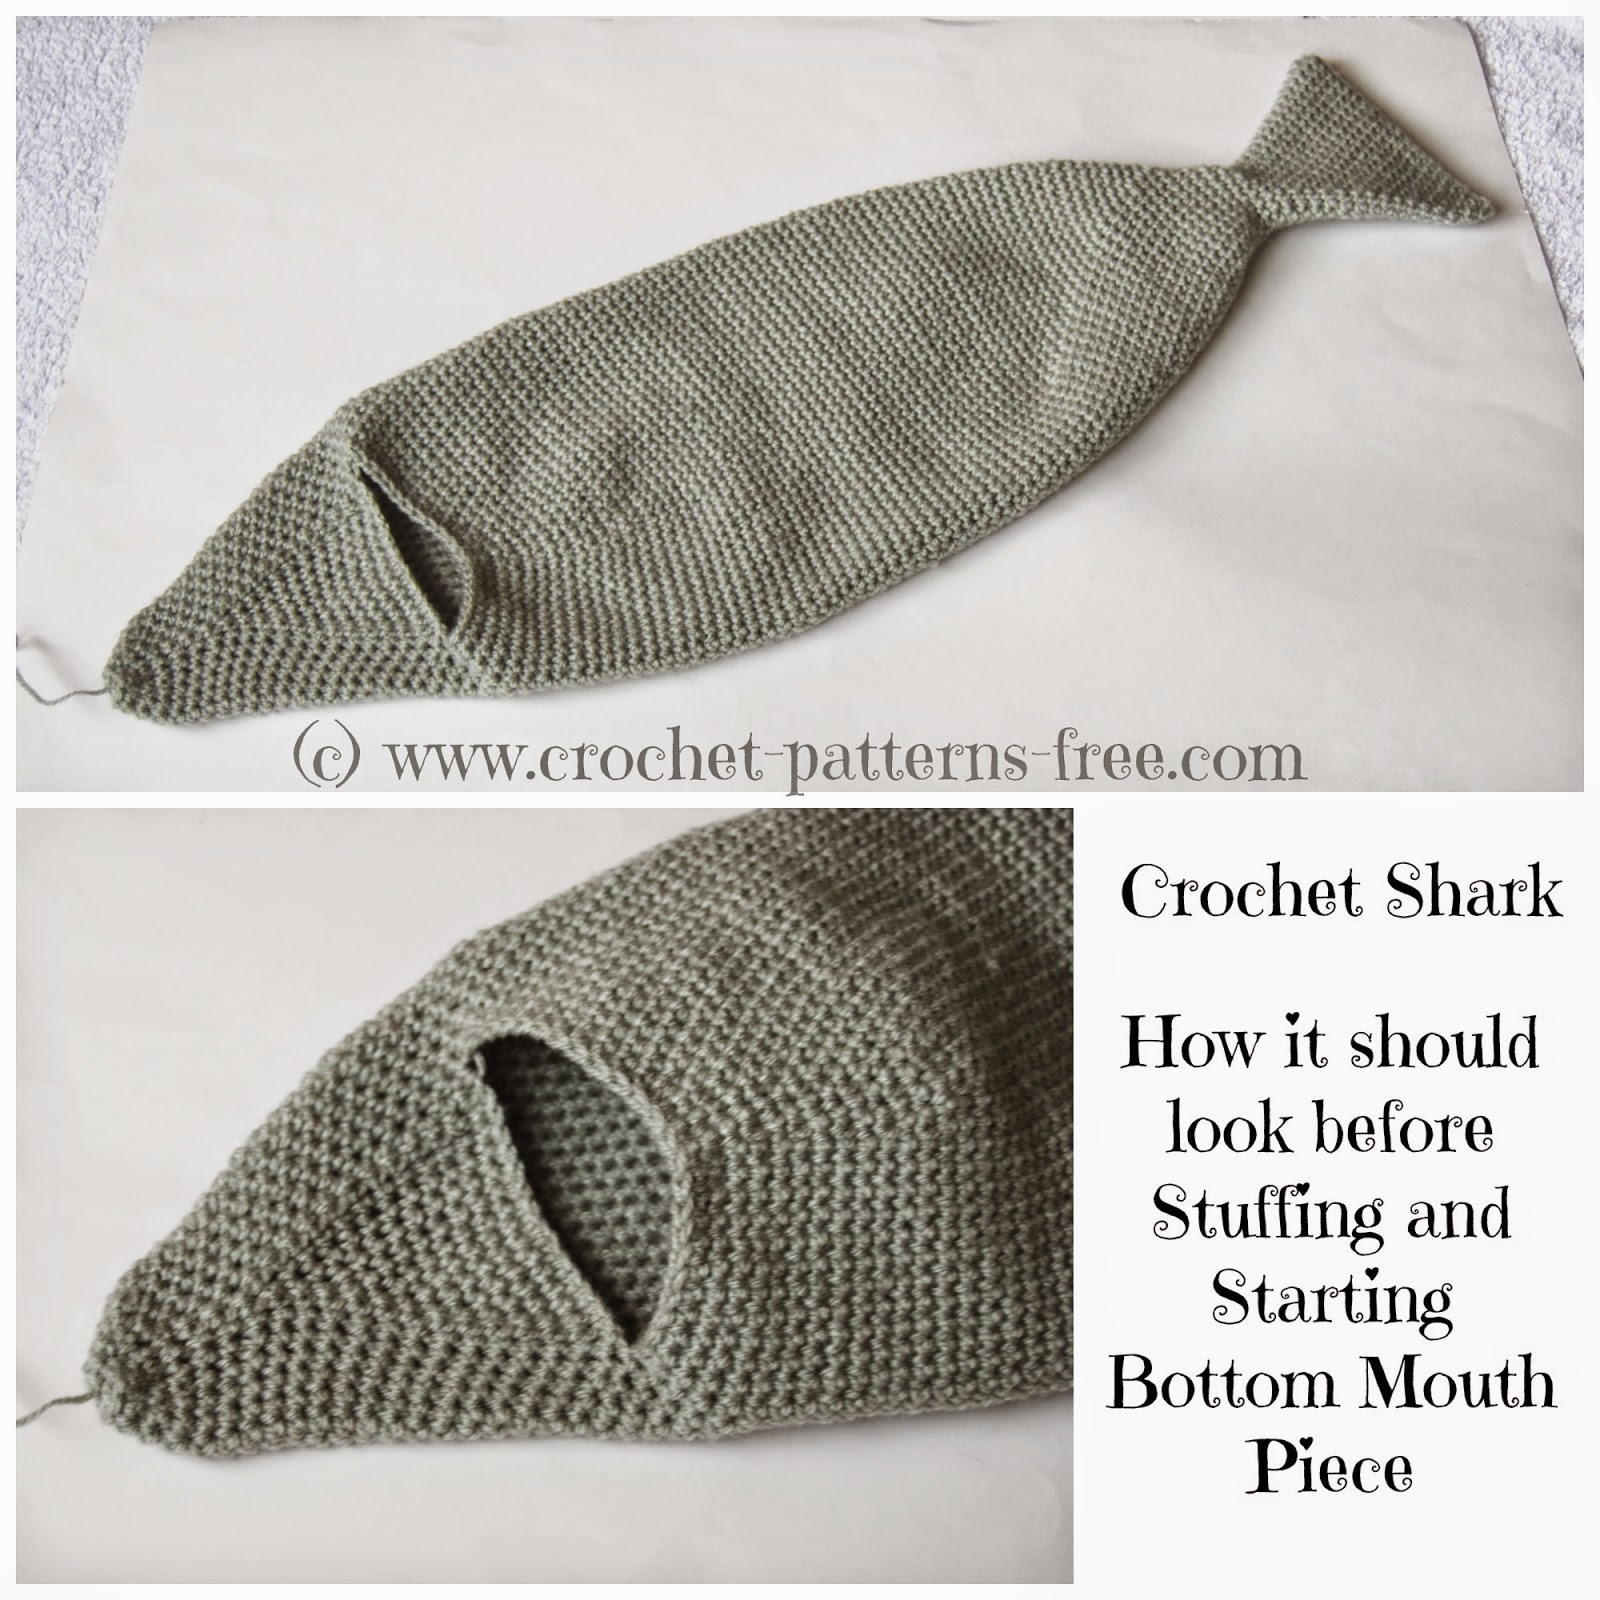 Crochet Shark Pattern Free Crochet Shark Pattern, free crochet patterns